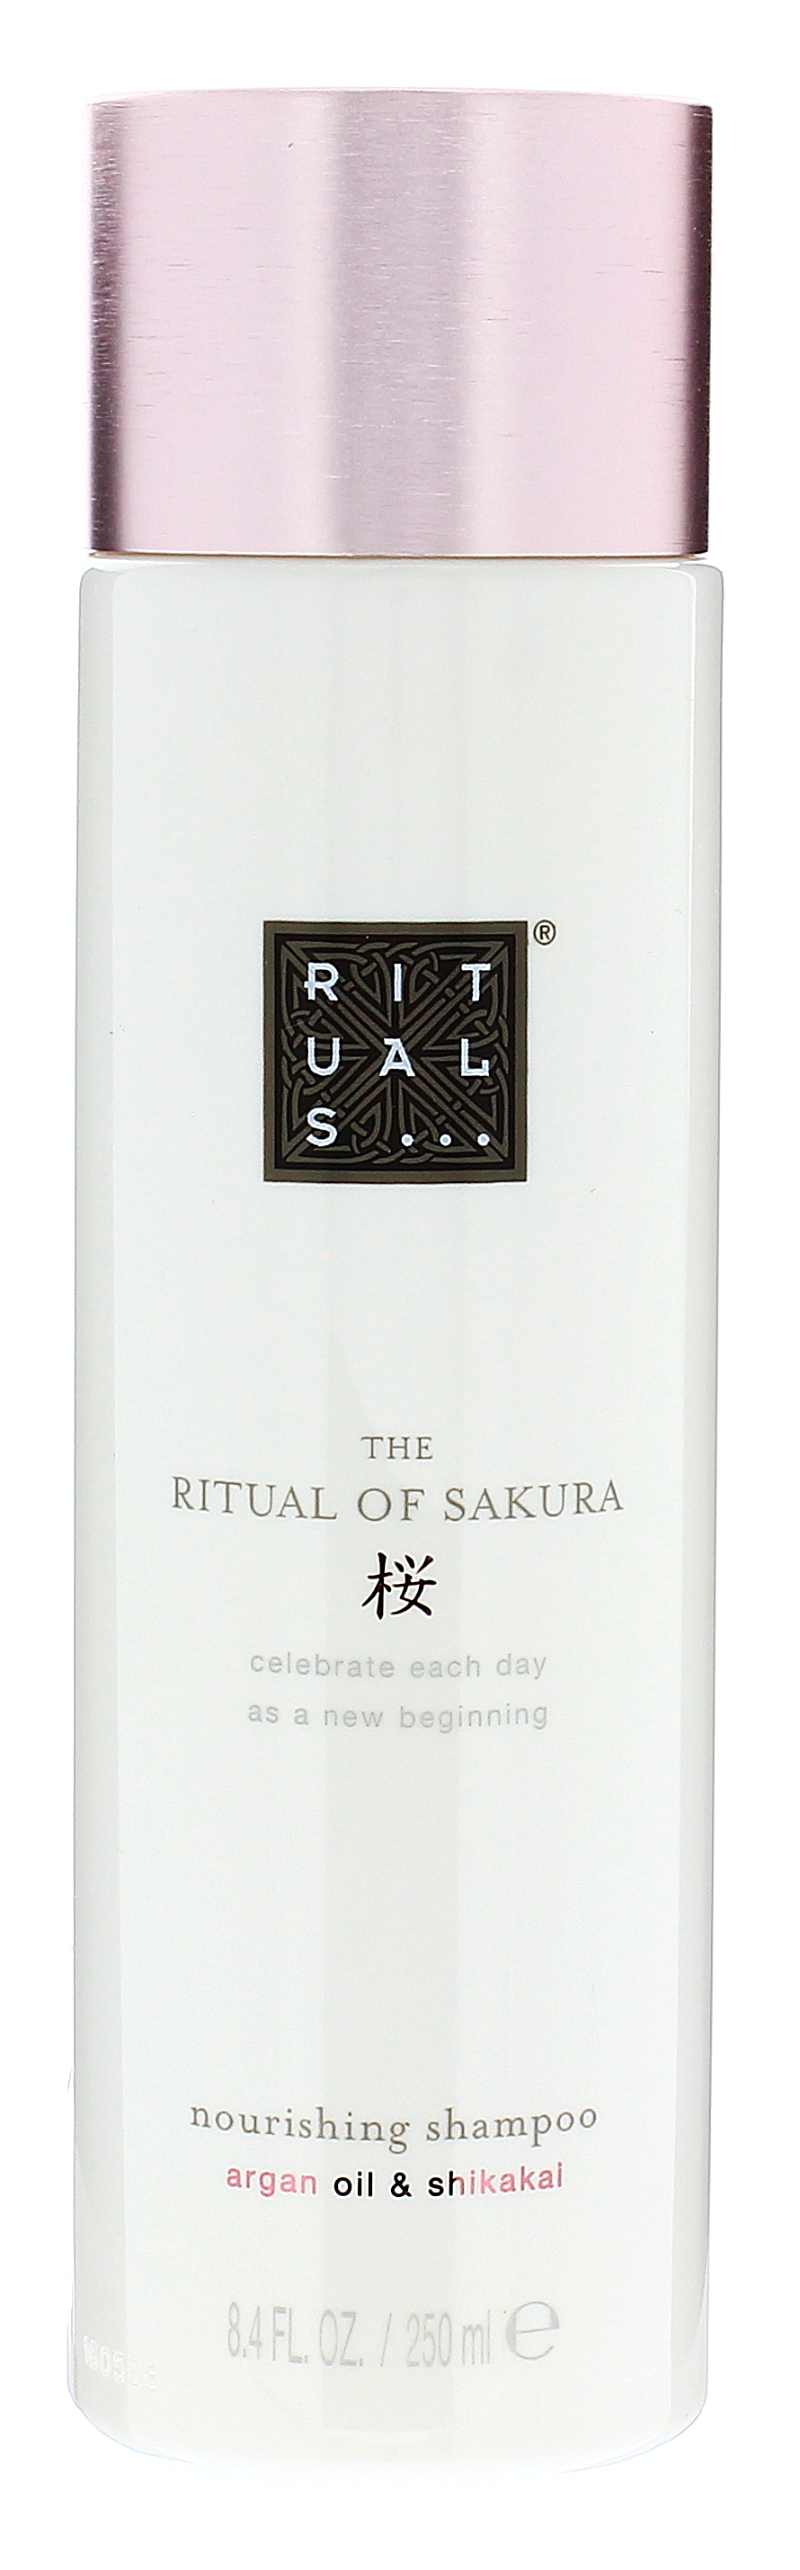 cliënt Kaal Supermarkt Rituals - The Ritual of Sakura Shampoo 250 ml